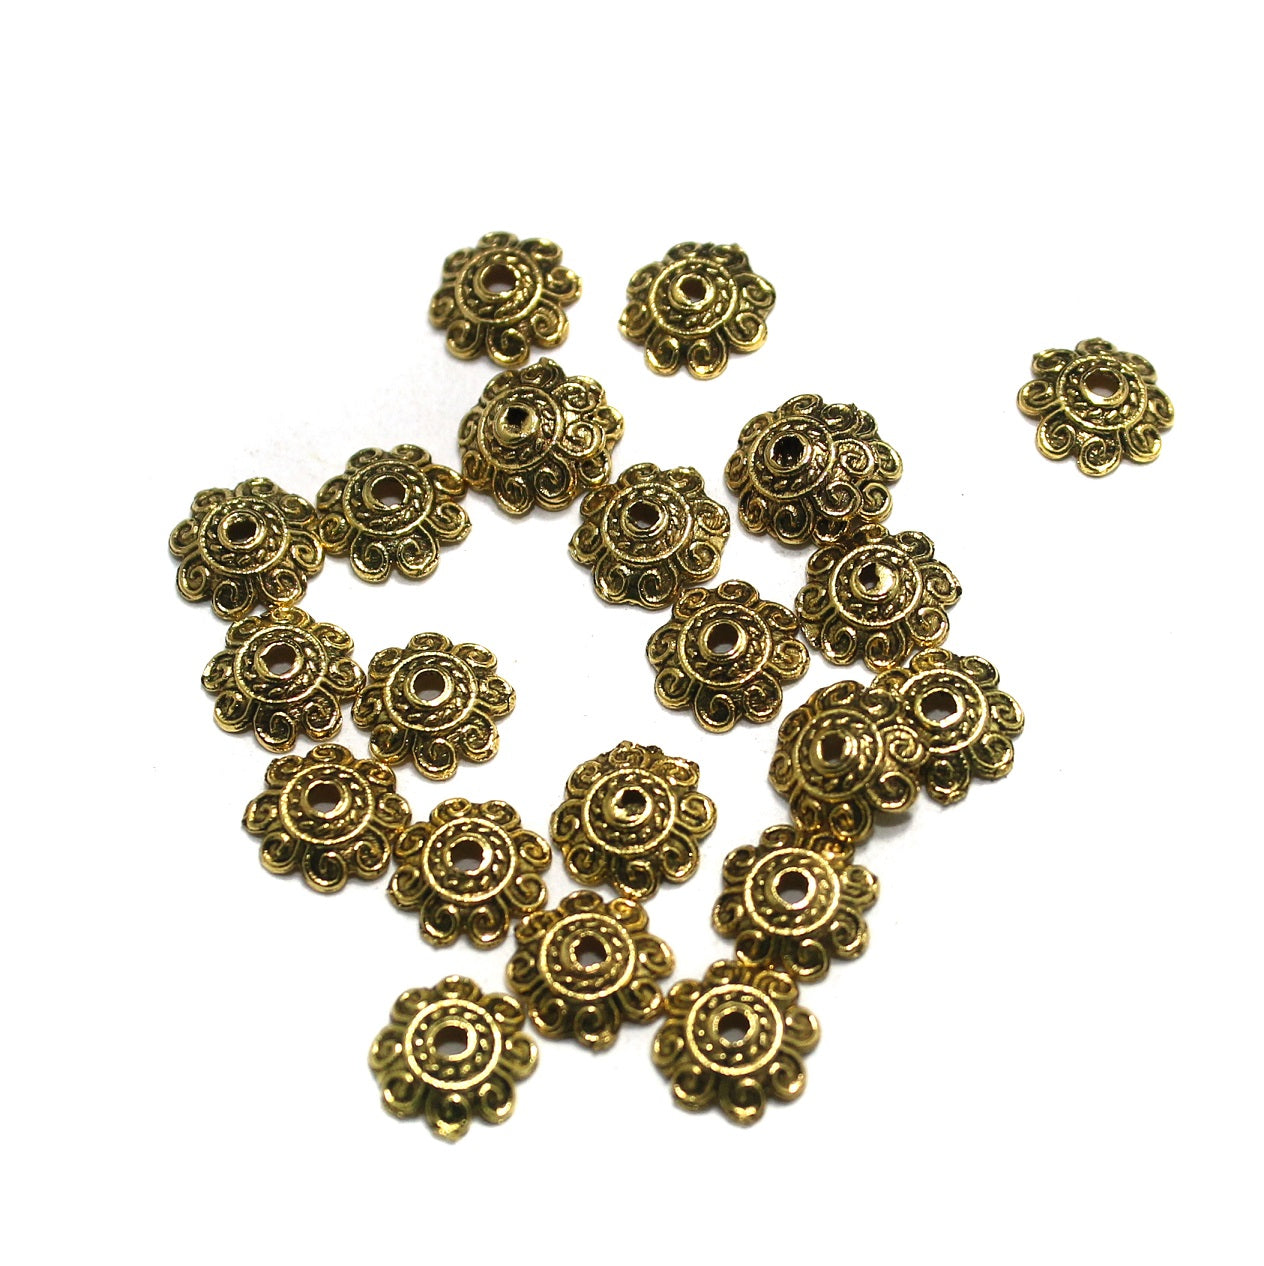 200 Pcs German Silver Beads Caps Golden 8mm